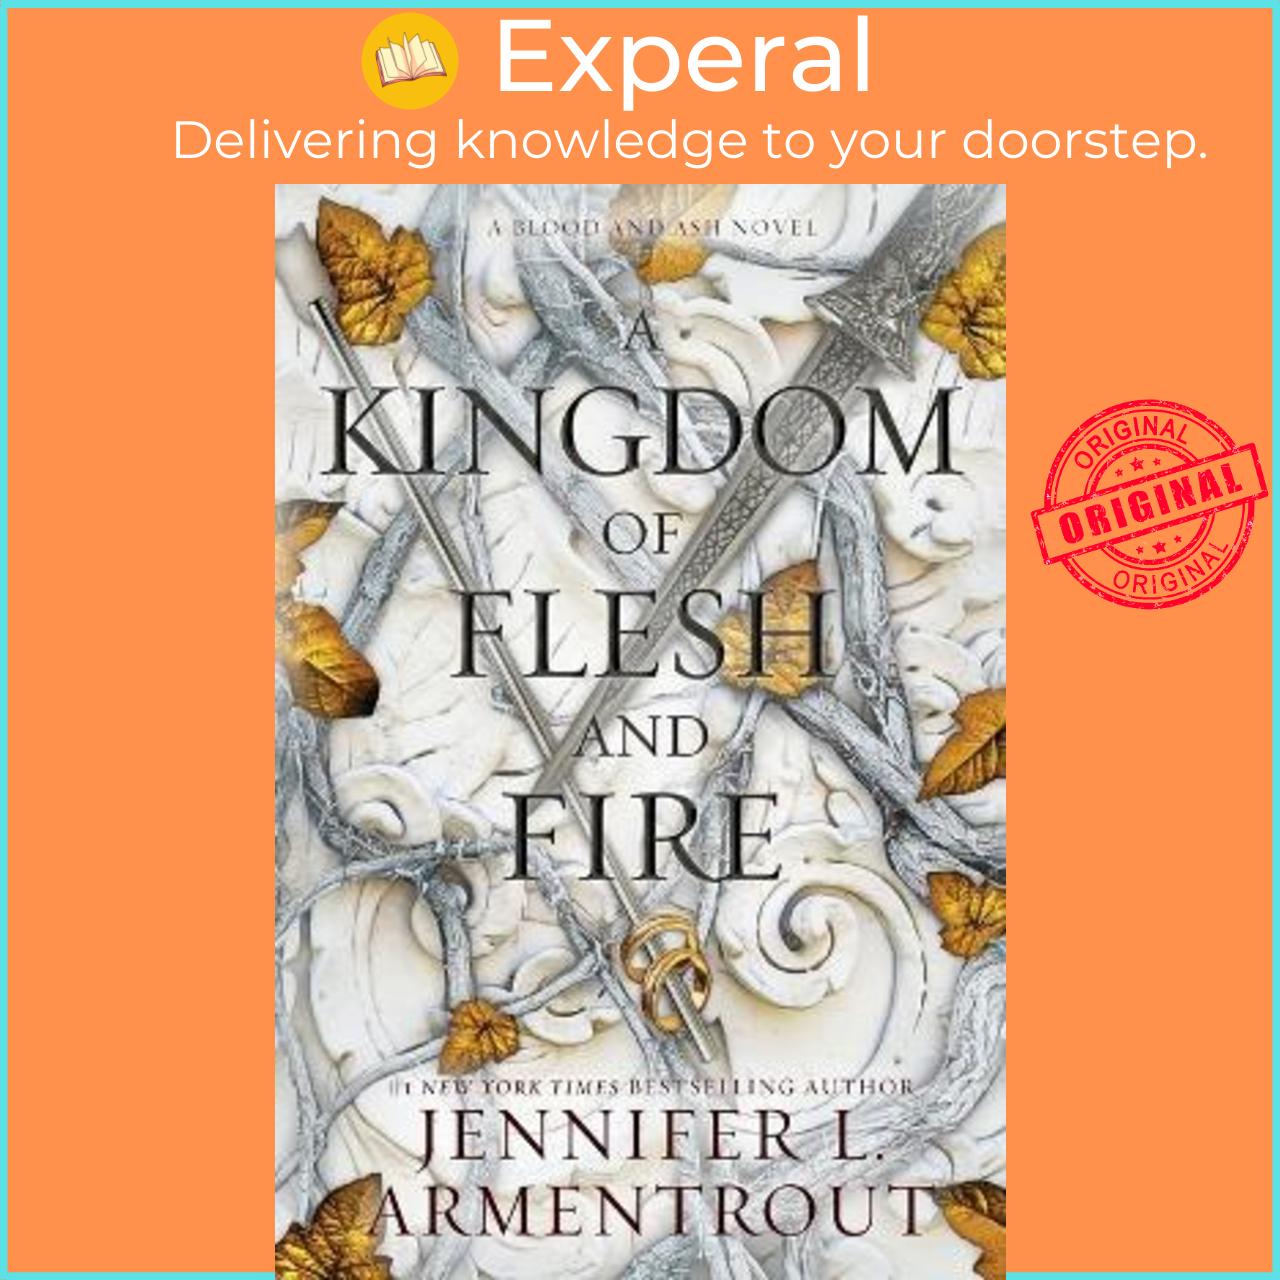 Sách - A Kingdom of Flesh and Fire by Jennifer L Armentrout (US edition, paperback)